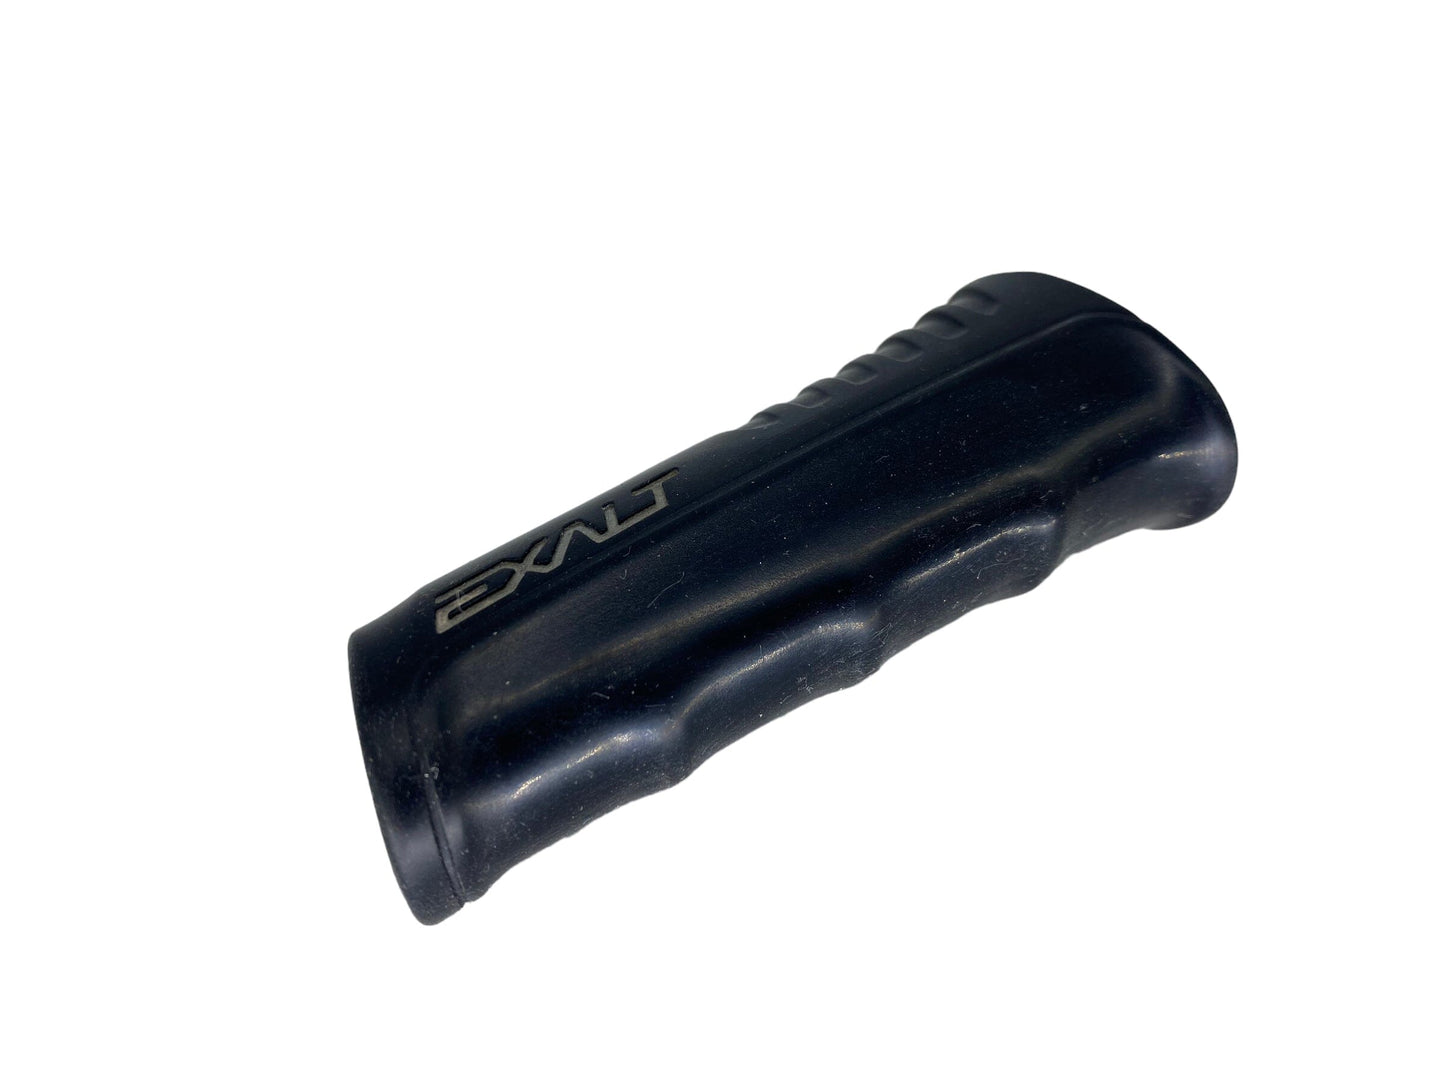 Used Exalt Shocker RSX Regulator Grip - Black Paintball Gun from CPXBrosPaintball Buy/Sell/Trade Paintball Markers, Paintball Hoppers, Paintball Masks, and Hormesis Headbands